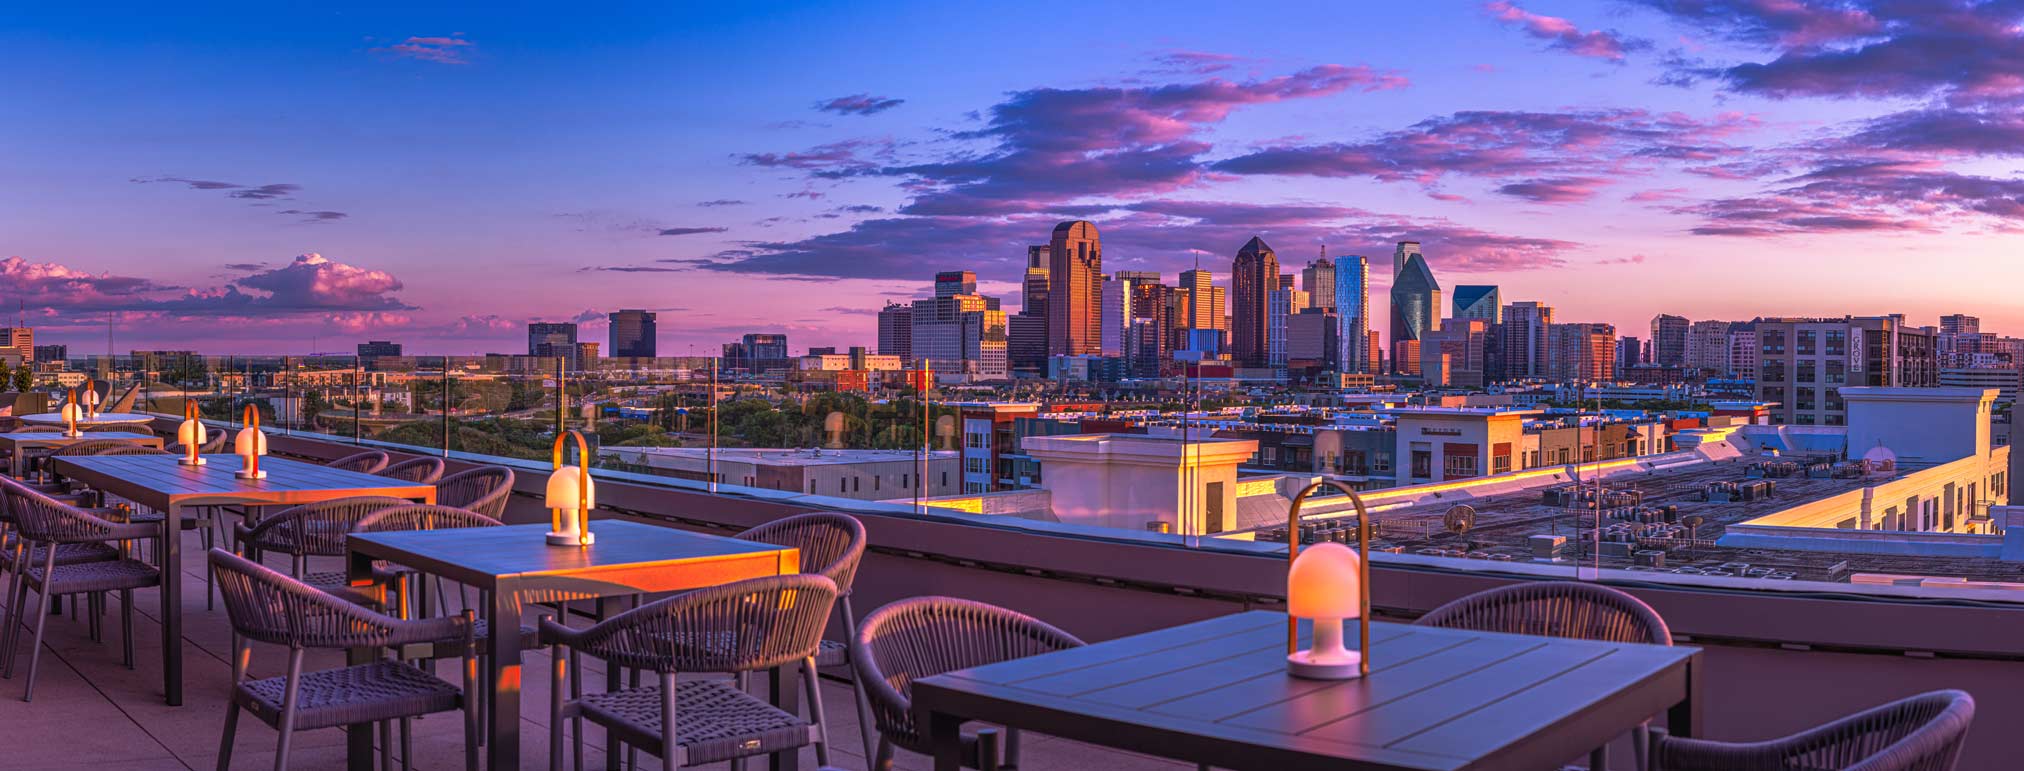 Upside West Village Rooftop Bar Dallas Travel Guide: The Coolest City You  Should Visit - Foreign Fresh & Fierce